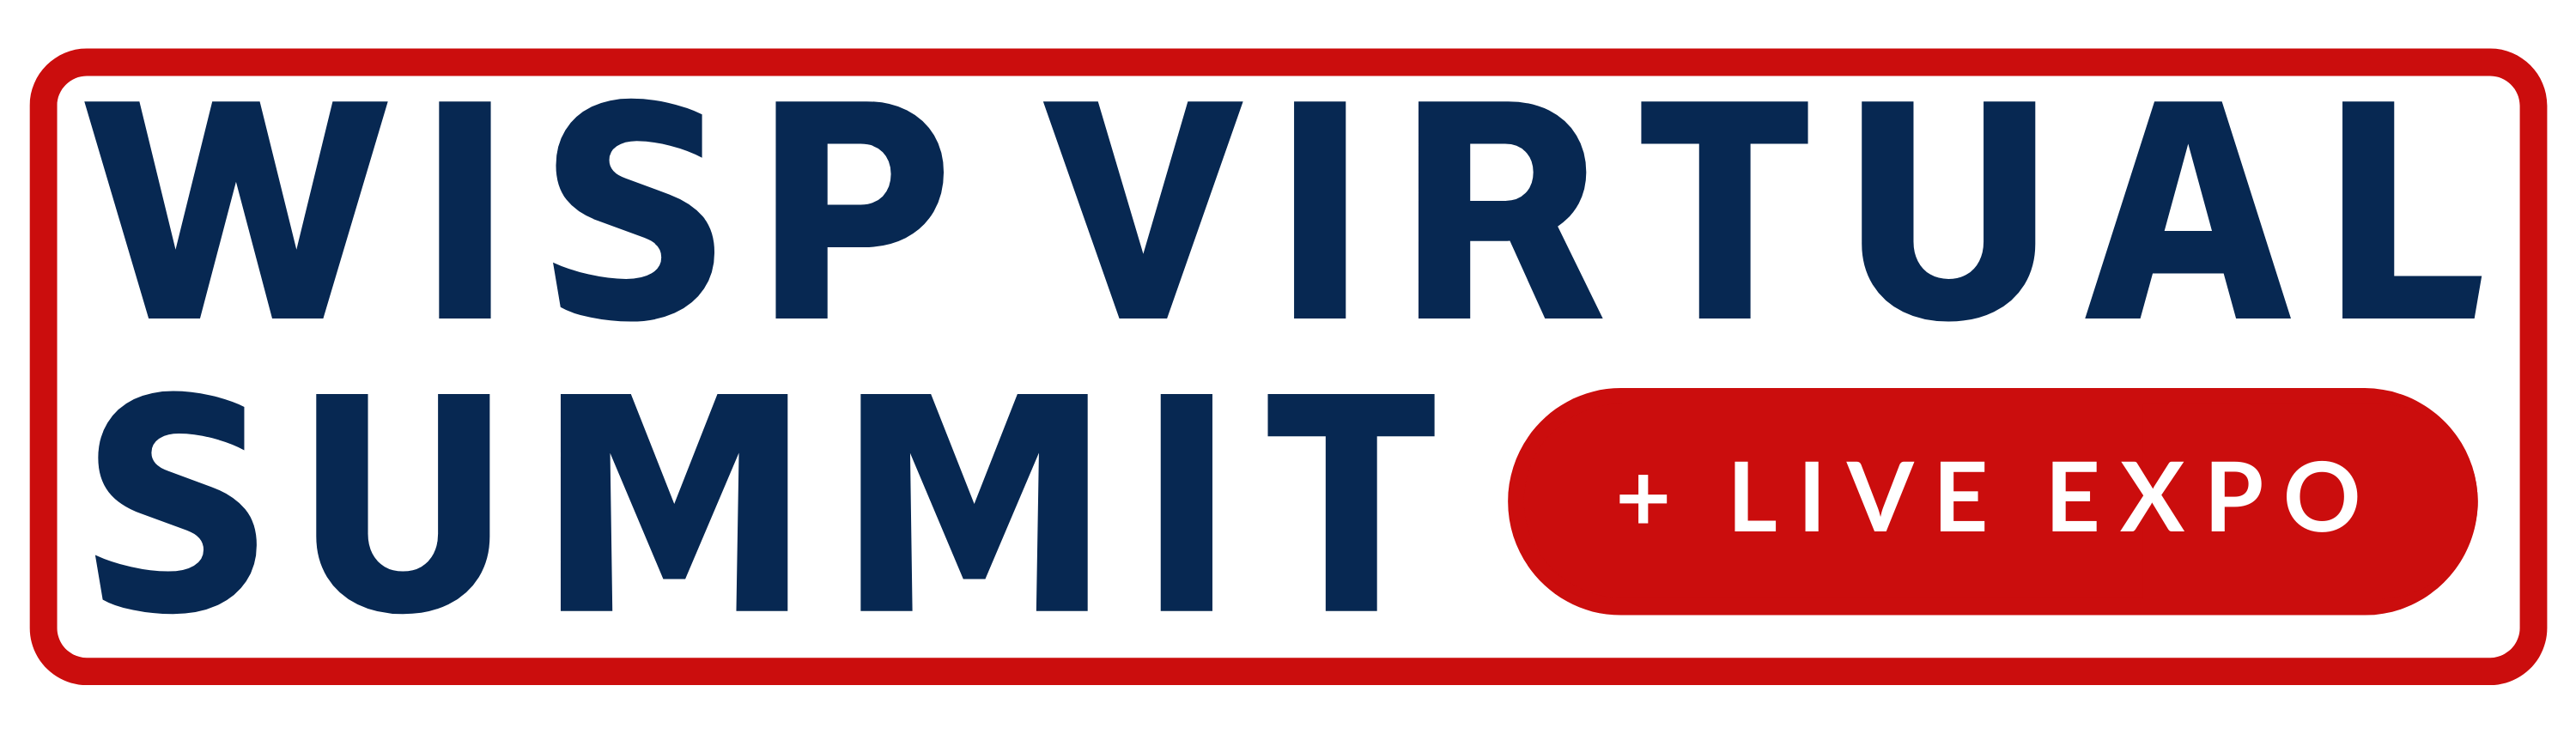 WISP Virtual Summit